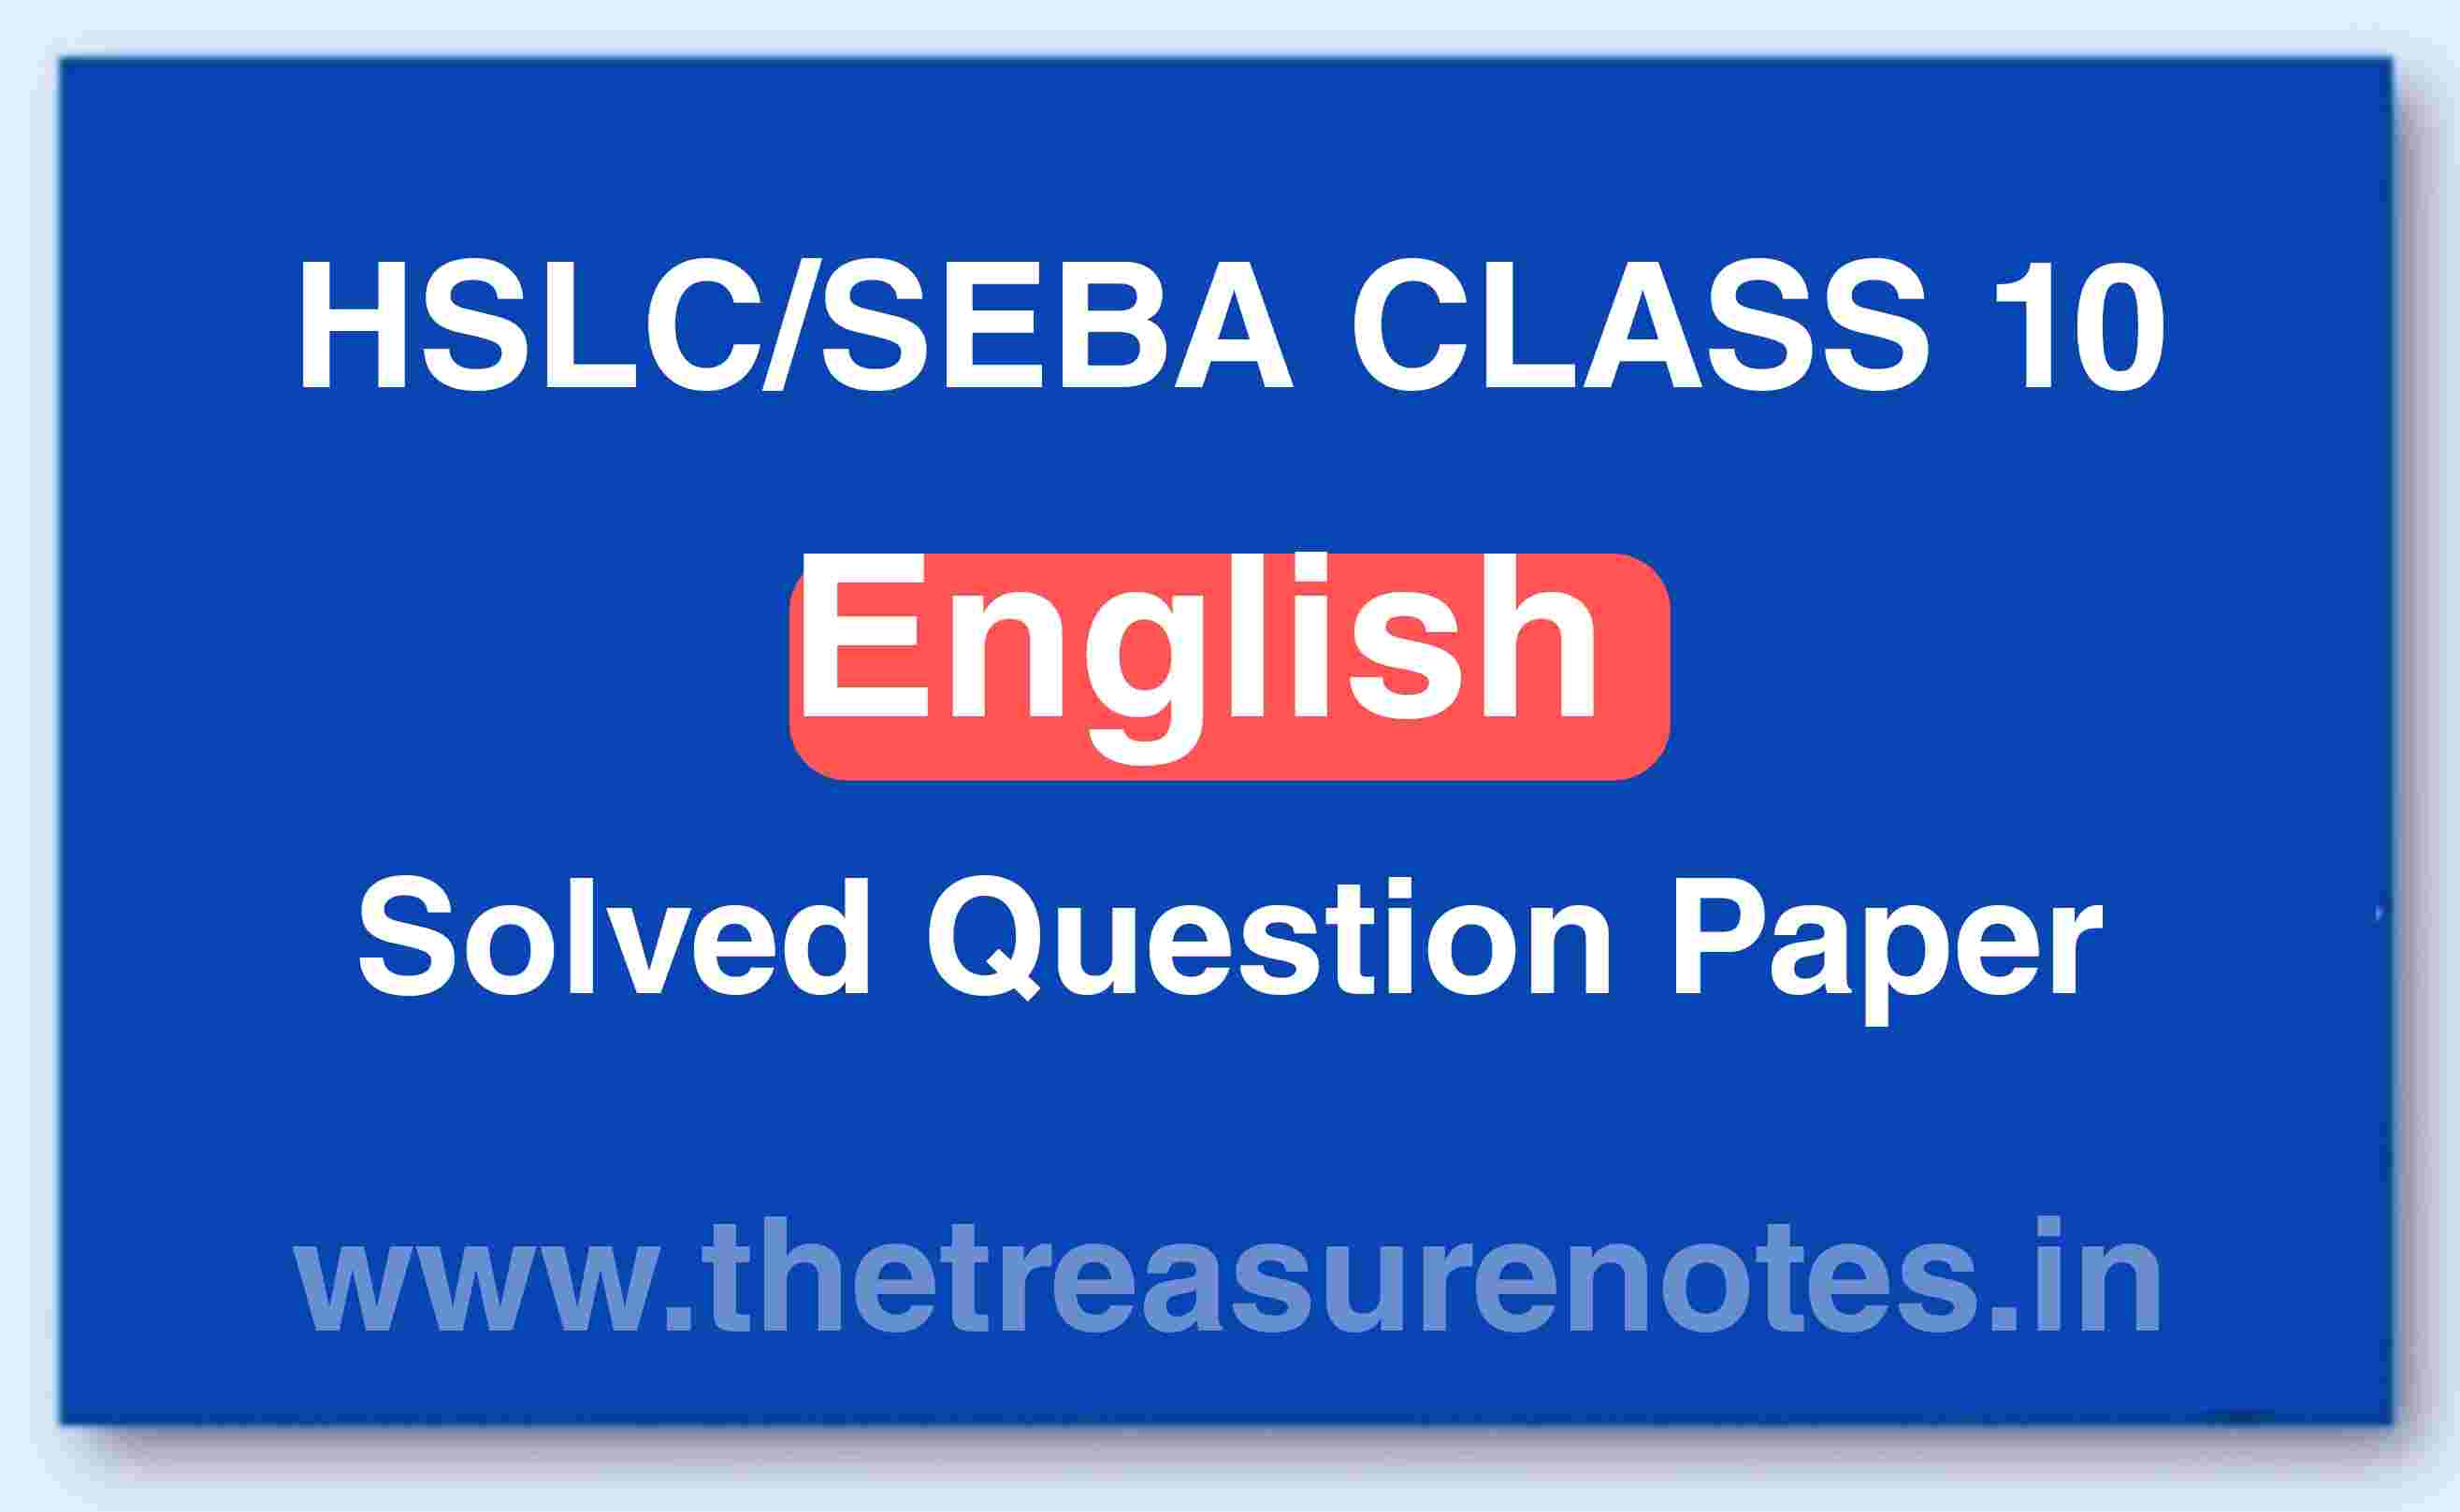 HSLC/SEBA Class 10 English Solved Question Paper 2018